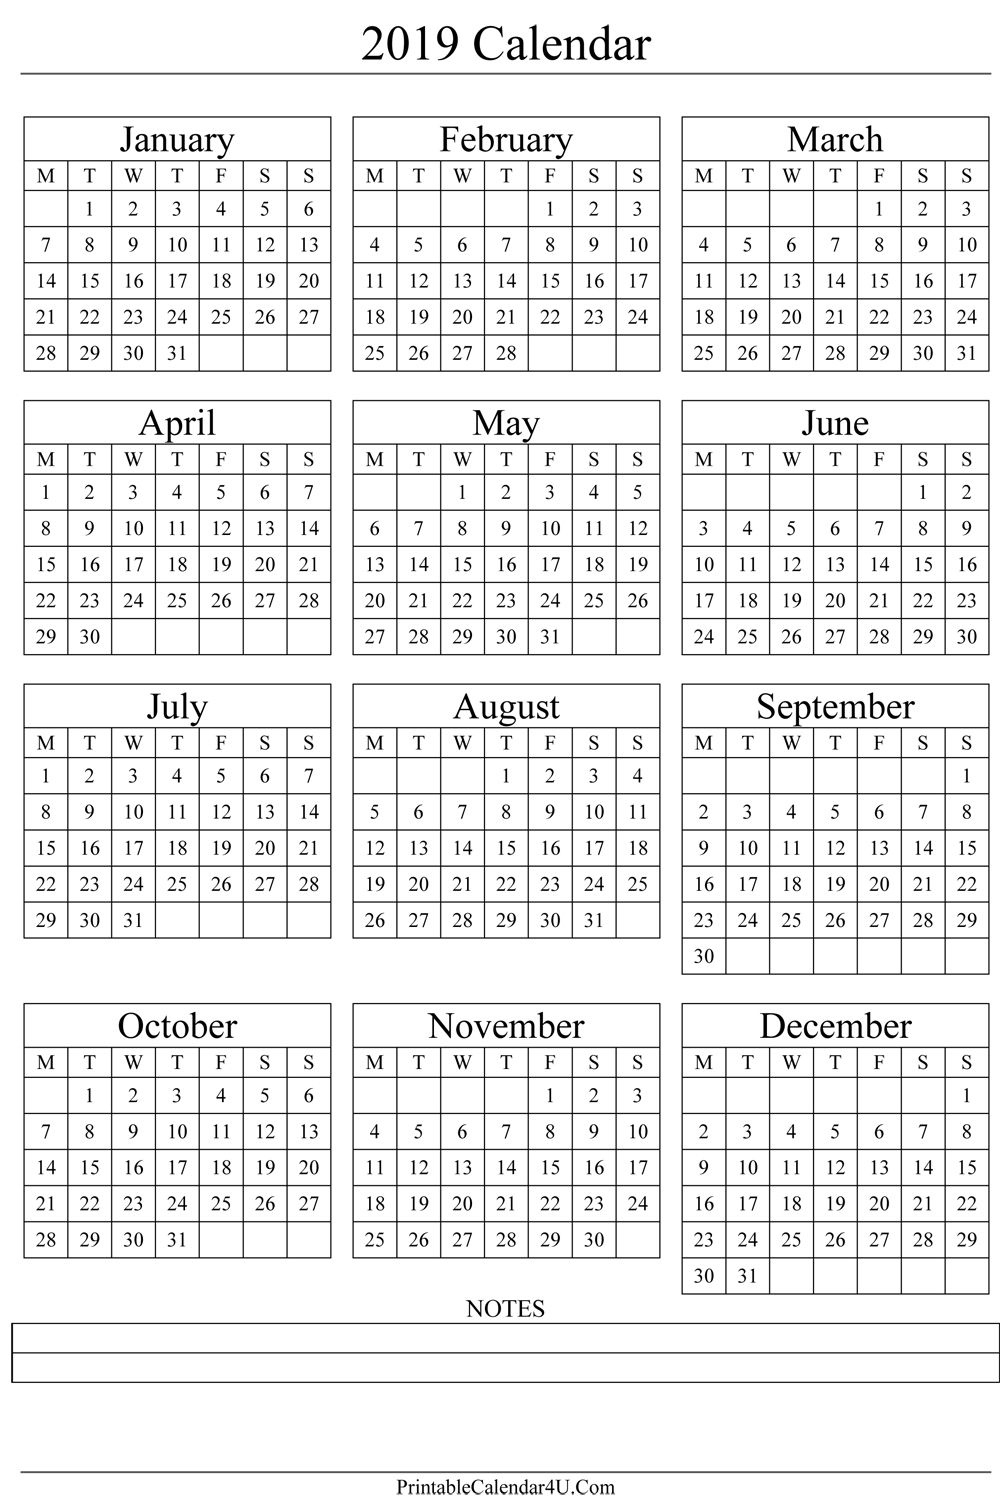 Annual Calendar 2019 Portrait Printable Calendar 2017 2018 6 Year Calendar Template